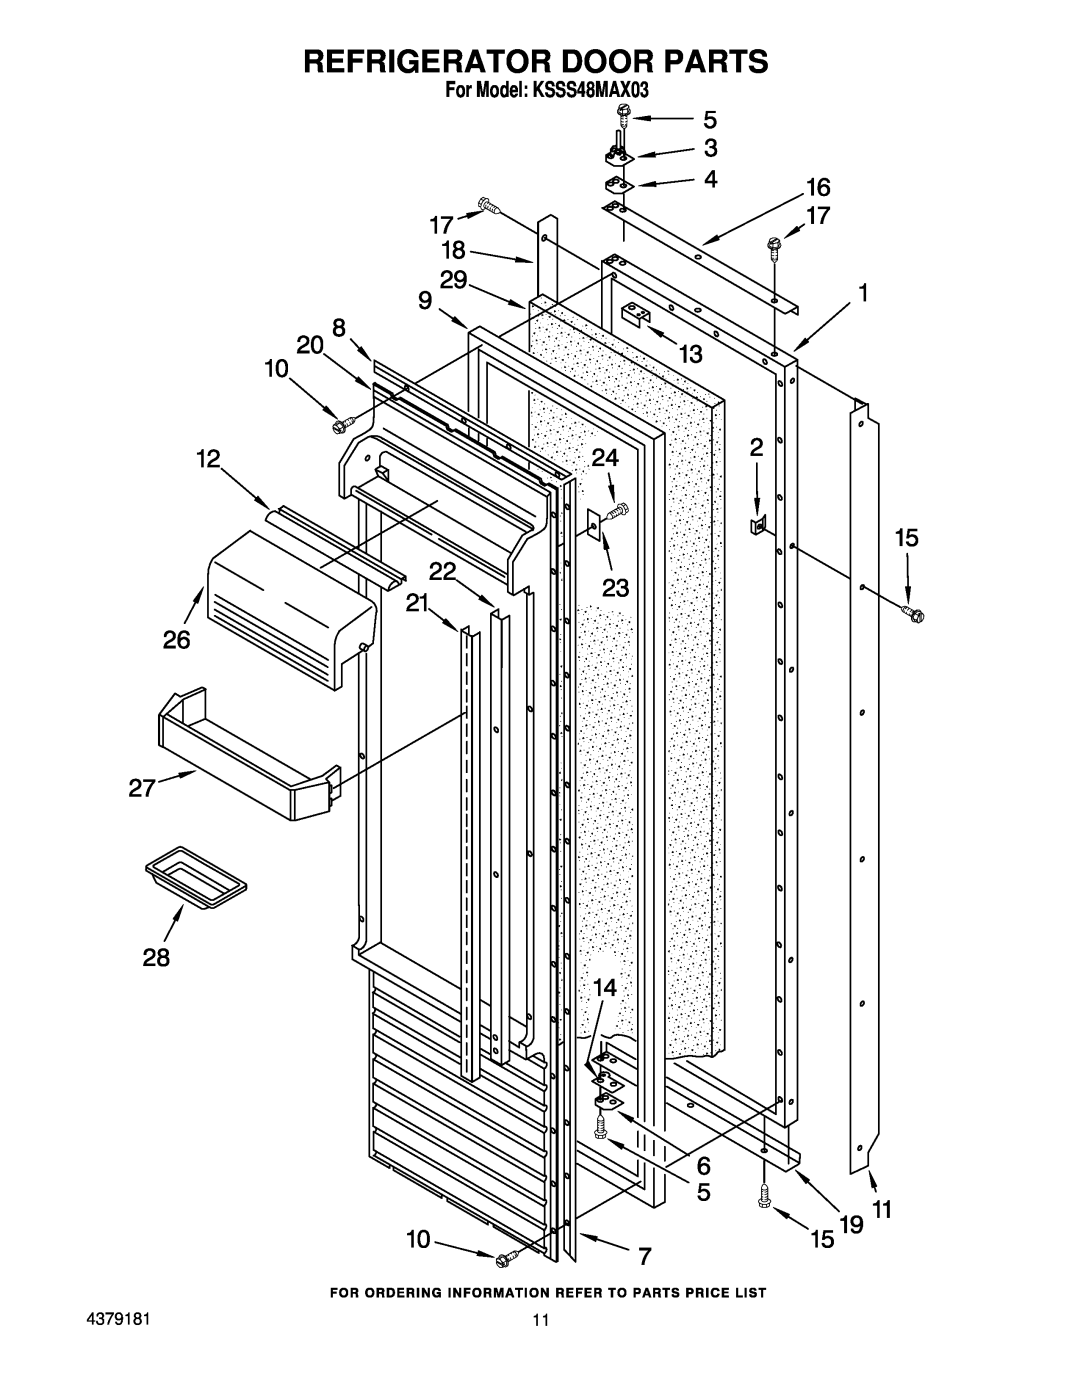 KitchenAid manual Refrigerator Door Parts, For Model KSSS48MAX03 